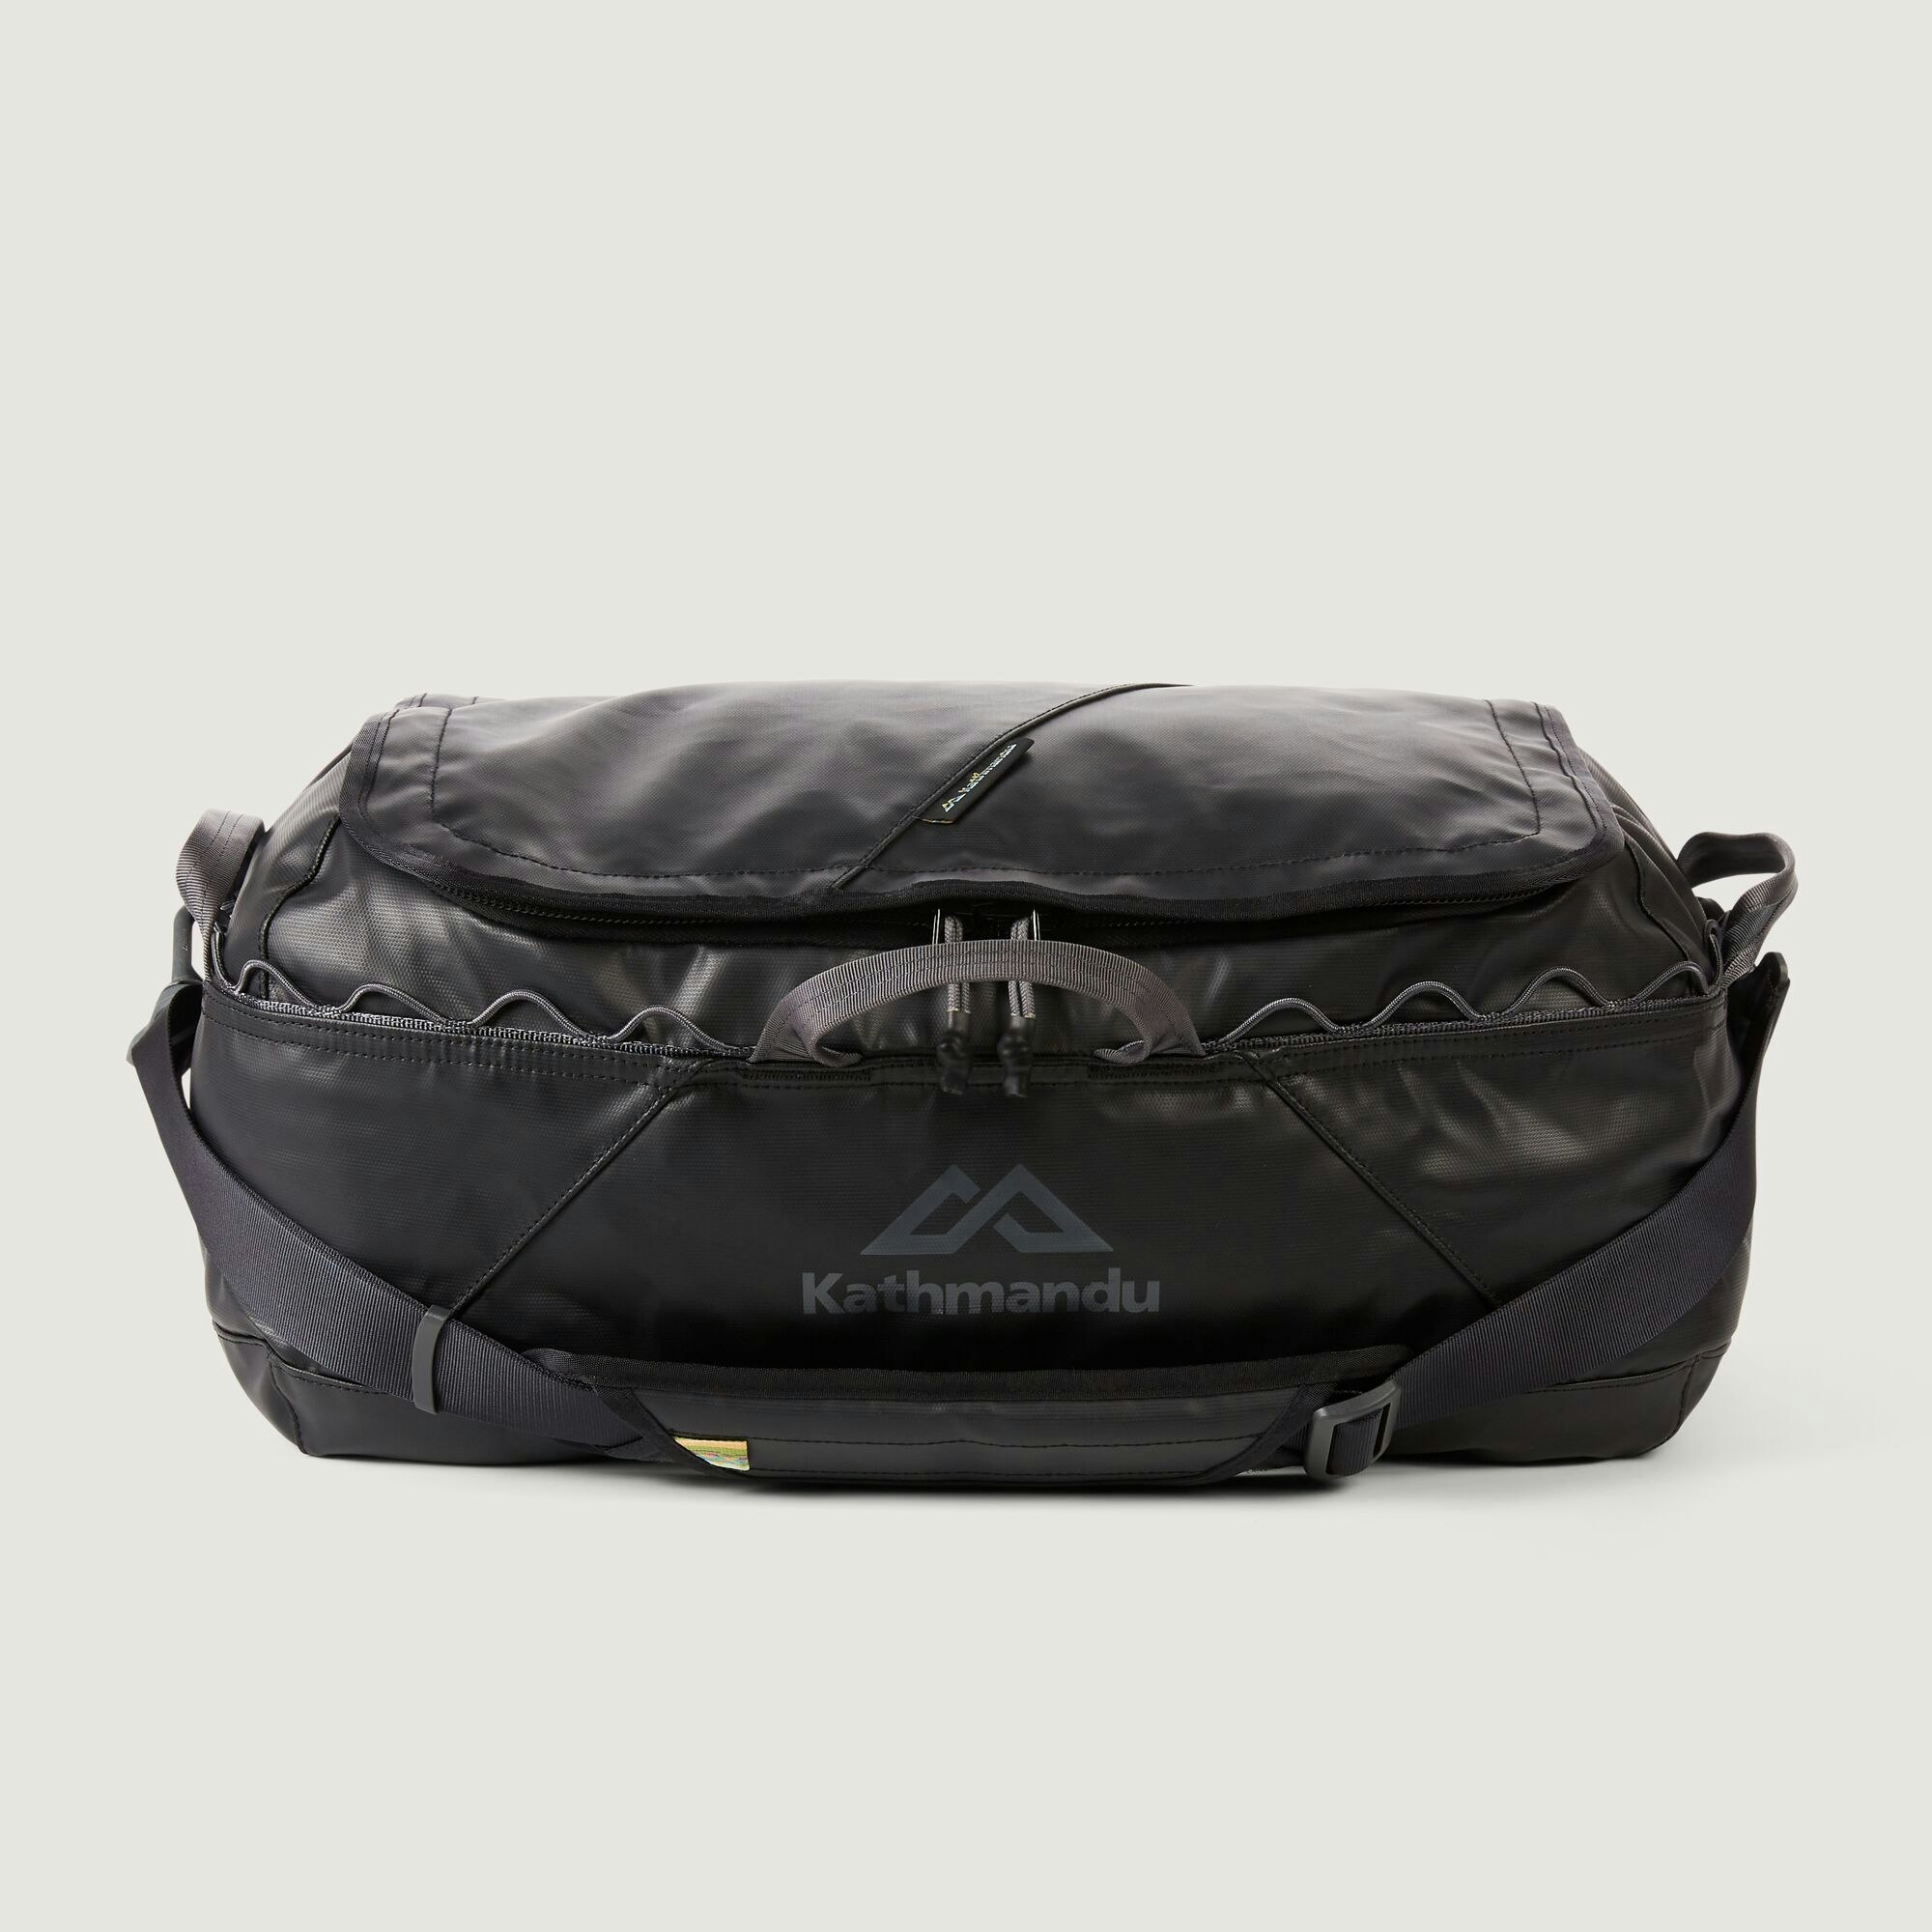 Bags & Backpacks | Outdoor Gear & Equipment | Kathmandu US